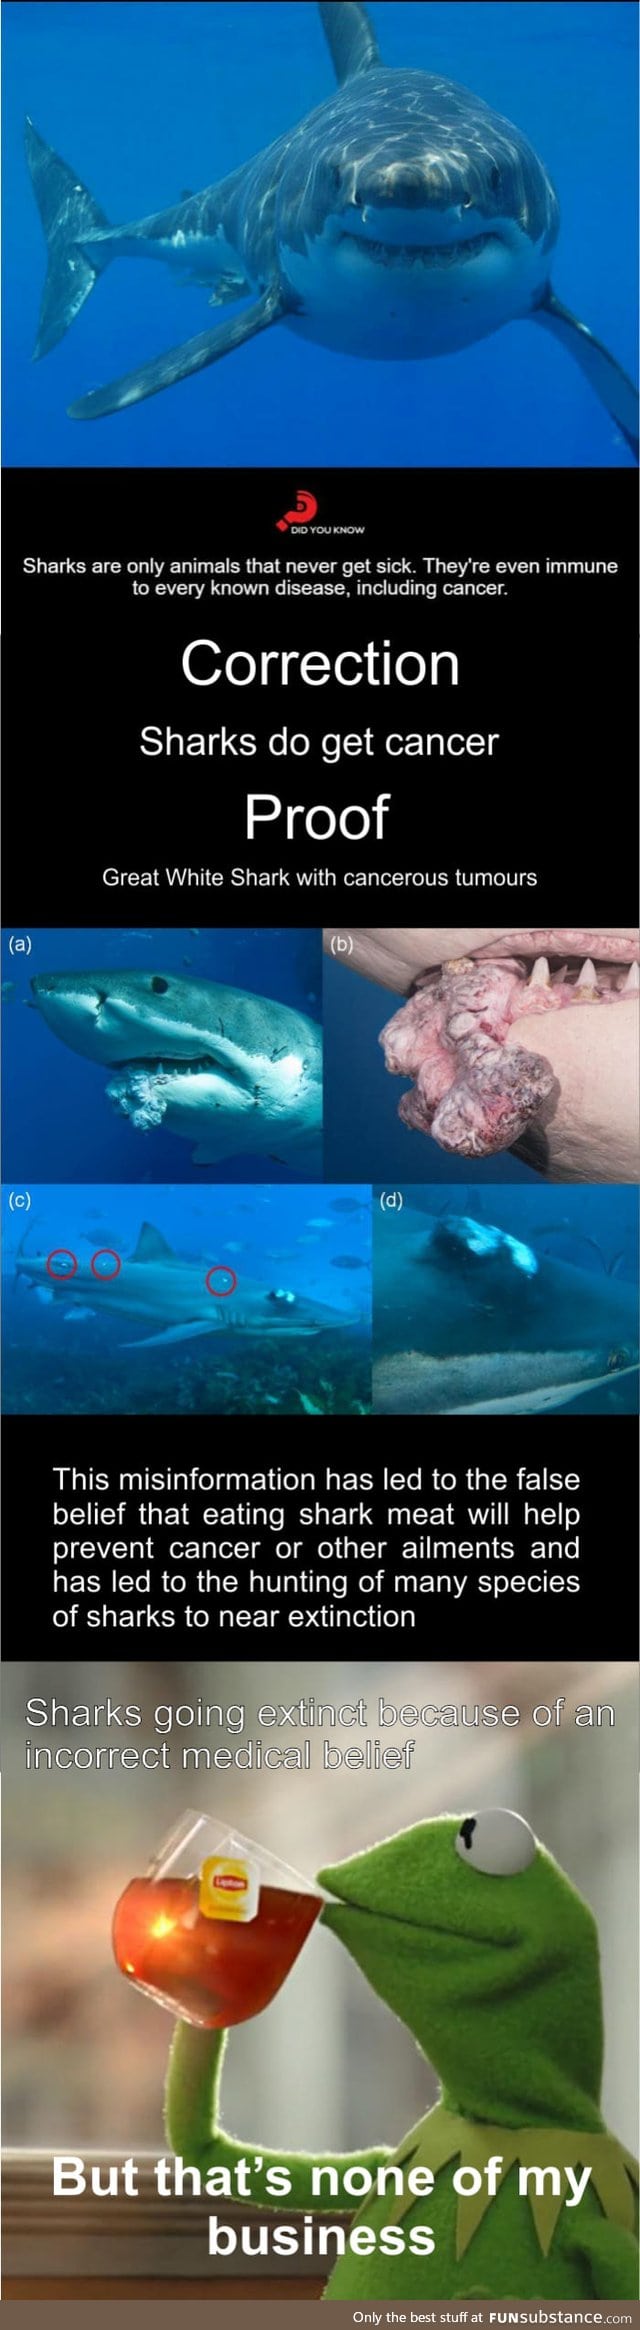 Sharks do get sick and get cancer